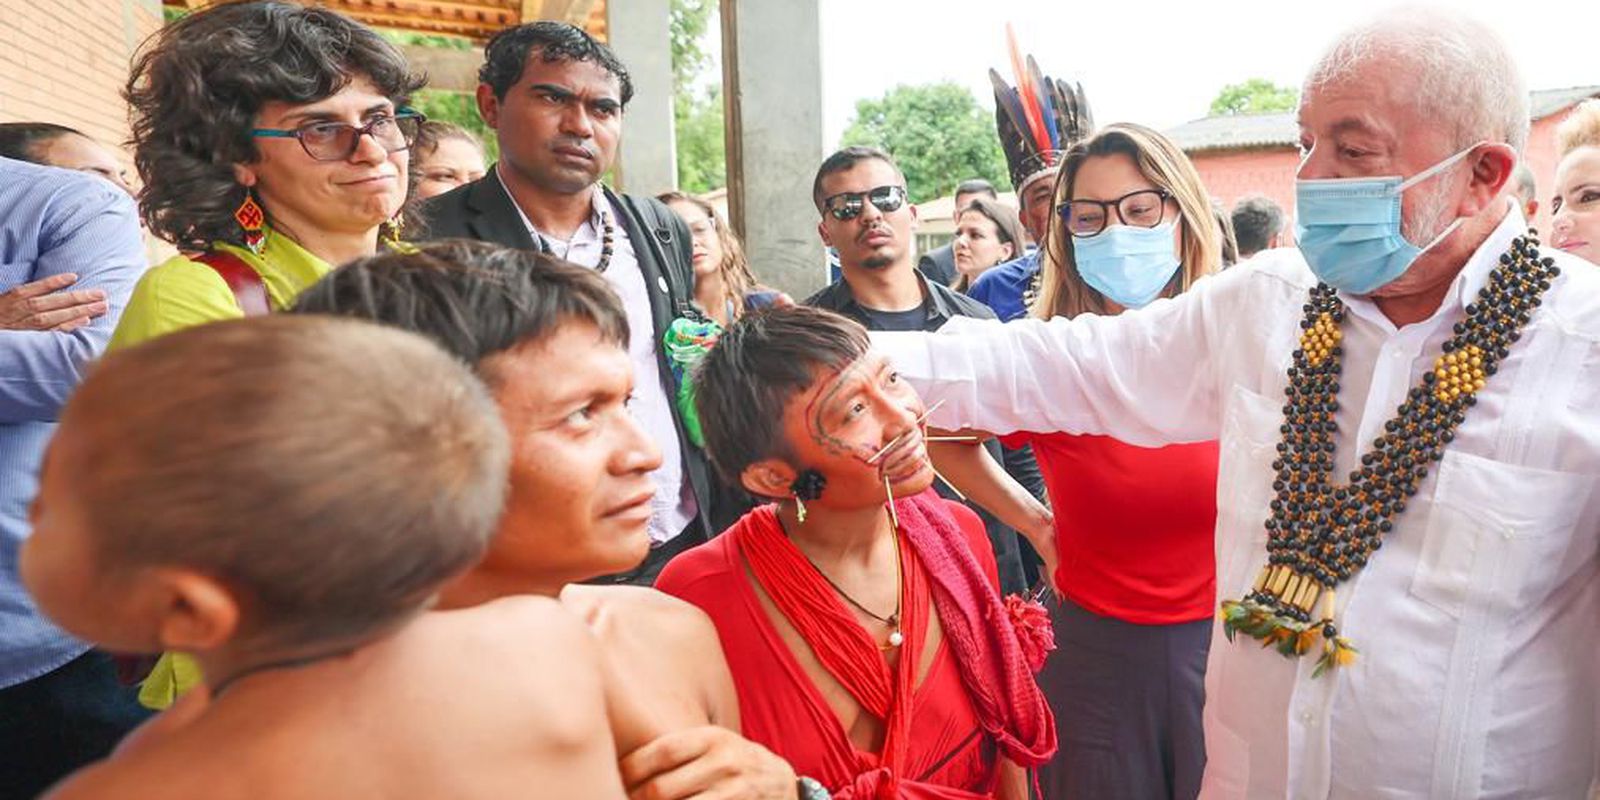 SUS force receives enrollment for volunteers in Yanomami territory